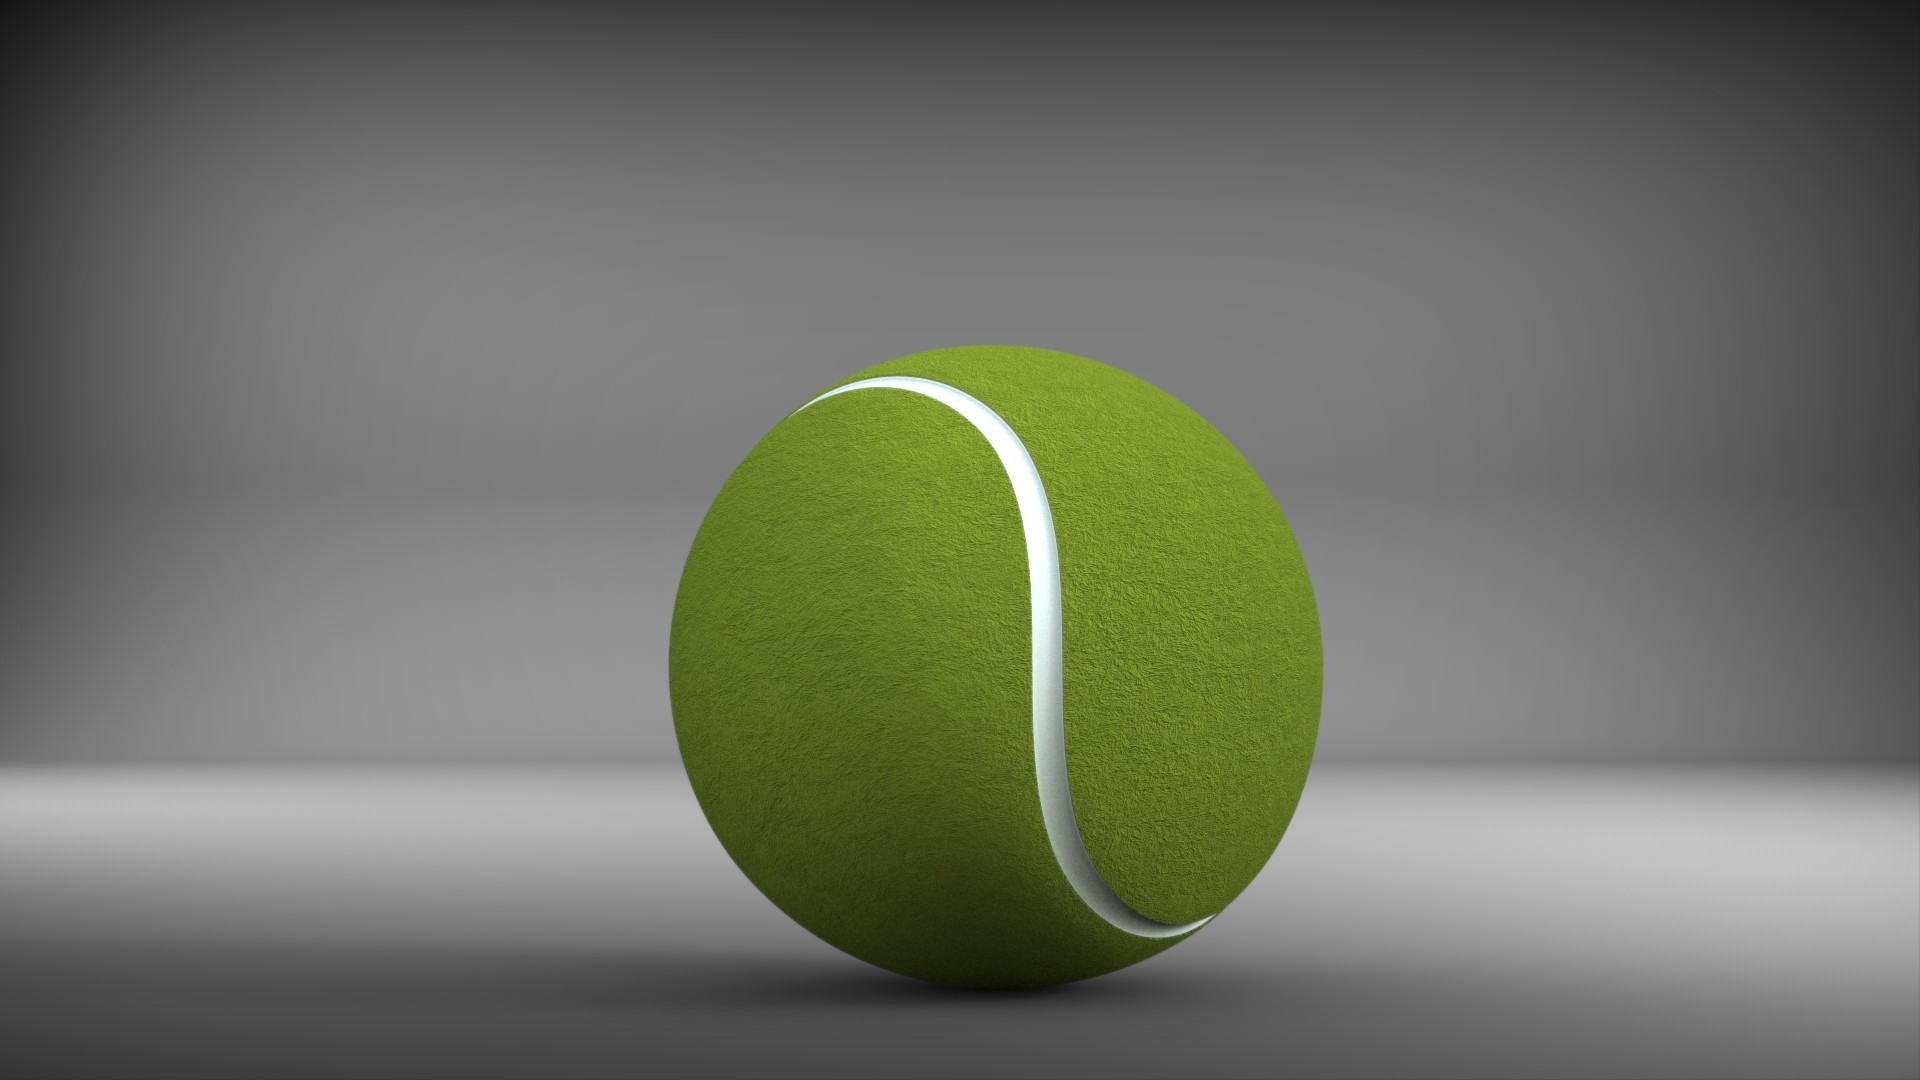 ArtStation - 3D tennis ball